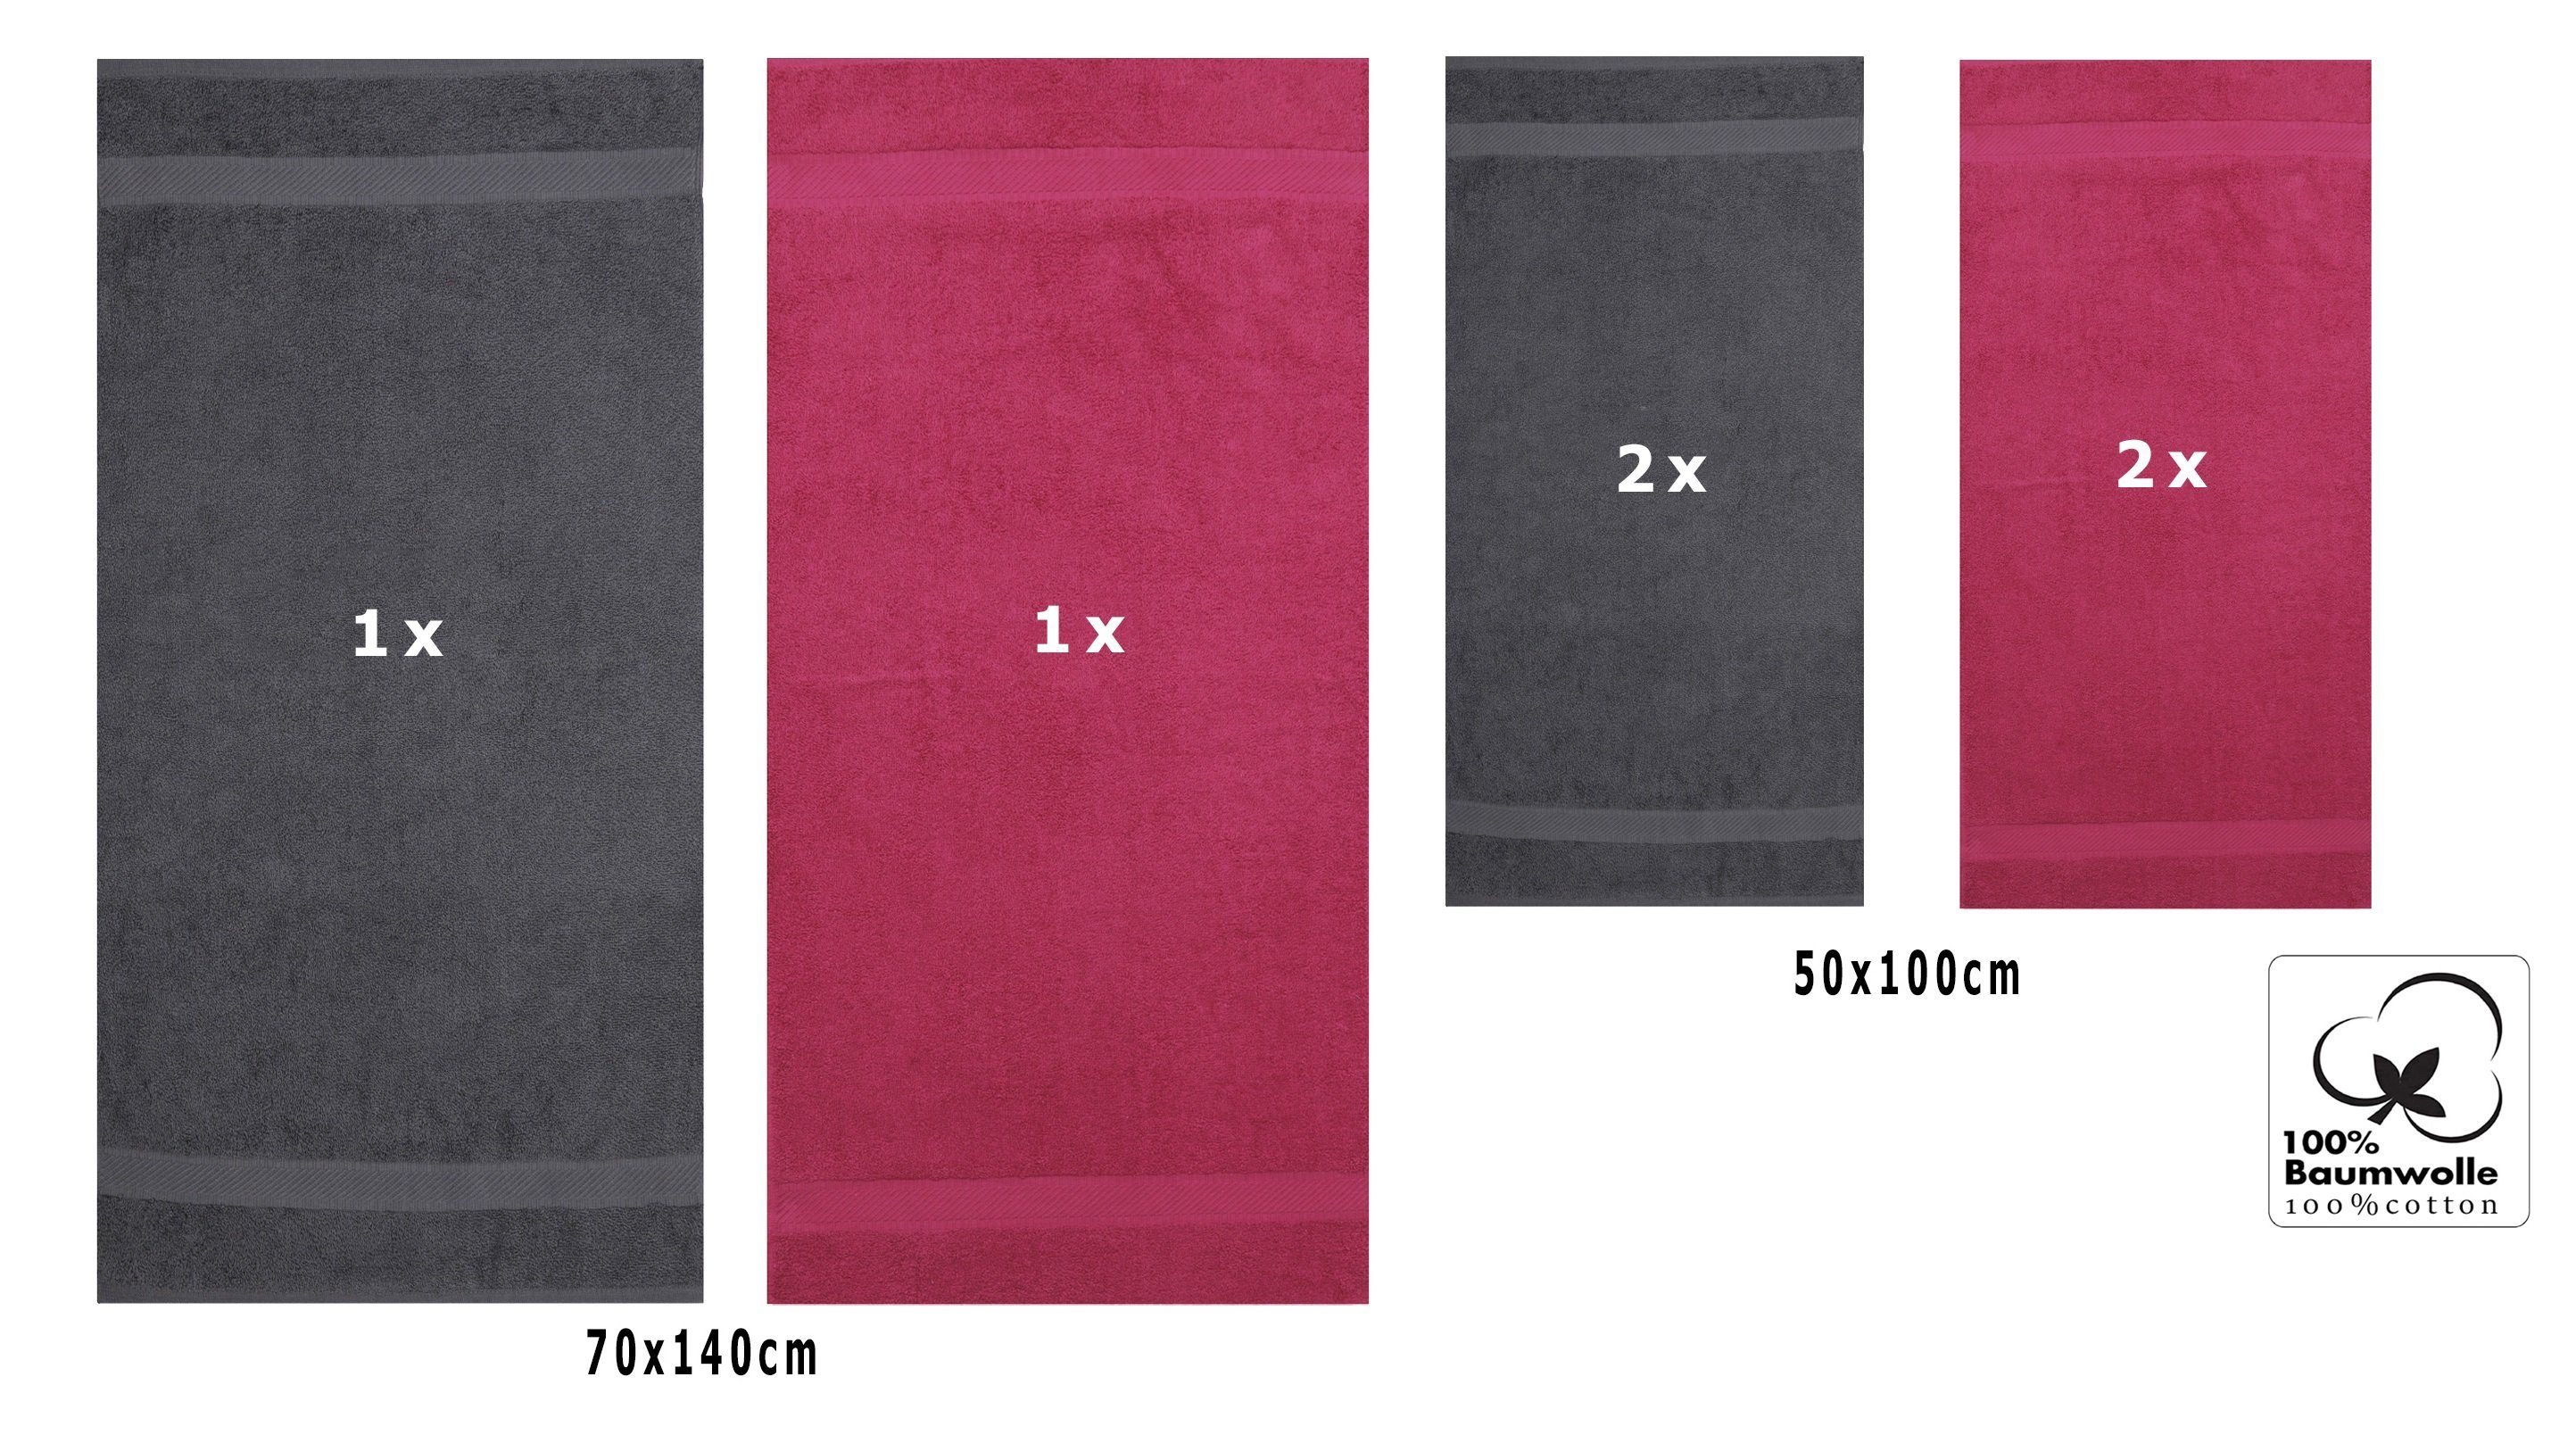 70x140 Handtücher, anthrazit/cranberry 100% Set Handtuch Liegetücher 4x 6er Betz Baumwolle Palermo cm 2x